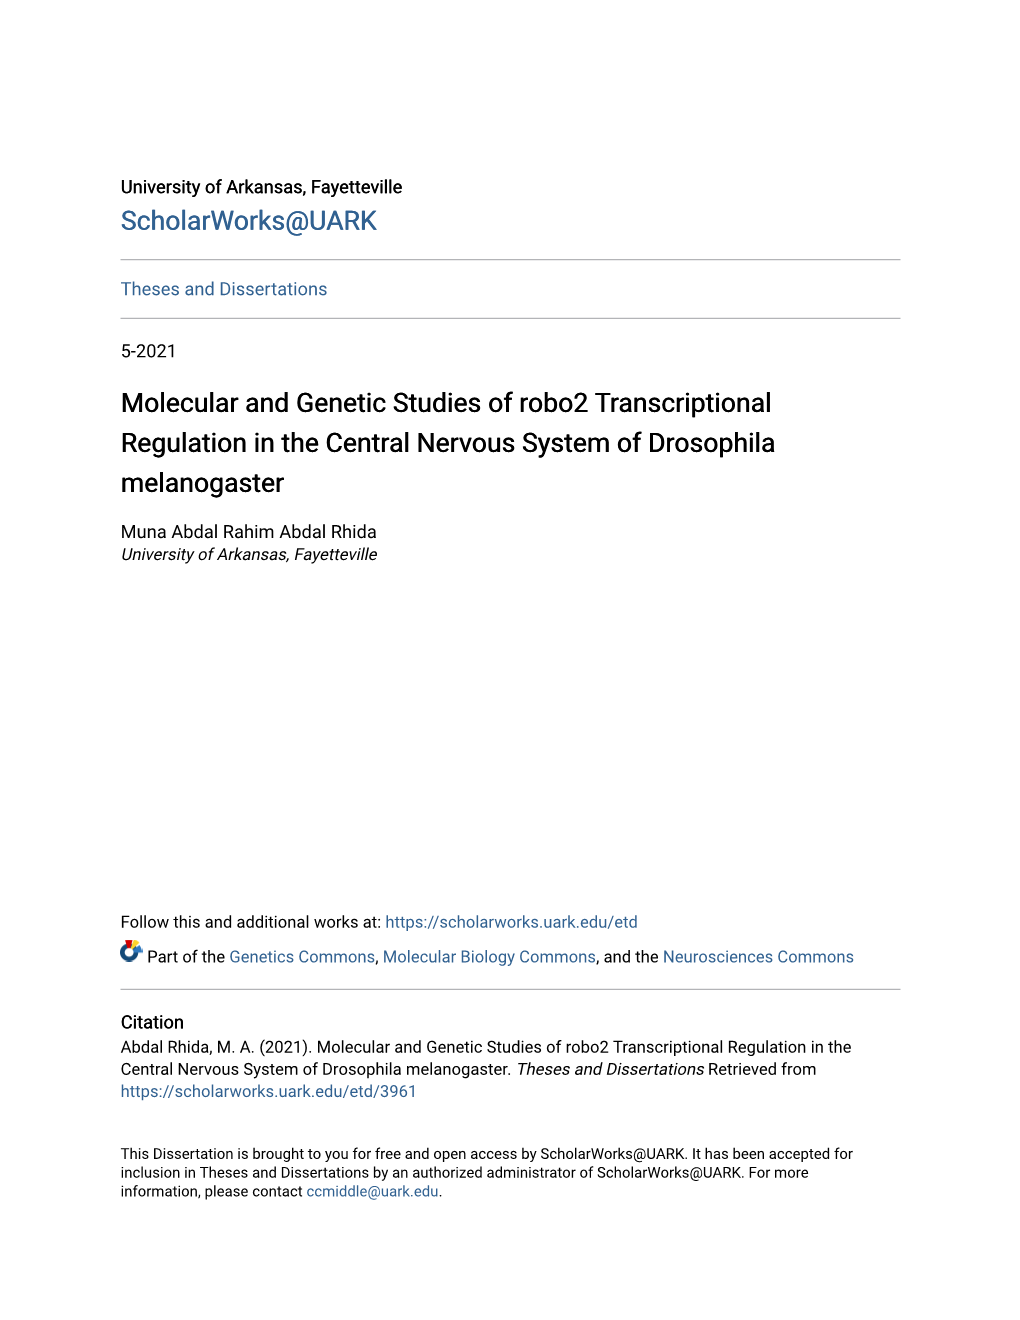 Molecular and Genetic Studies of Robo2 Transcriptional Regulation in the Central Nervous System of Drosophila Melanogaster